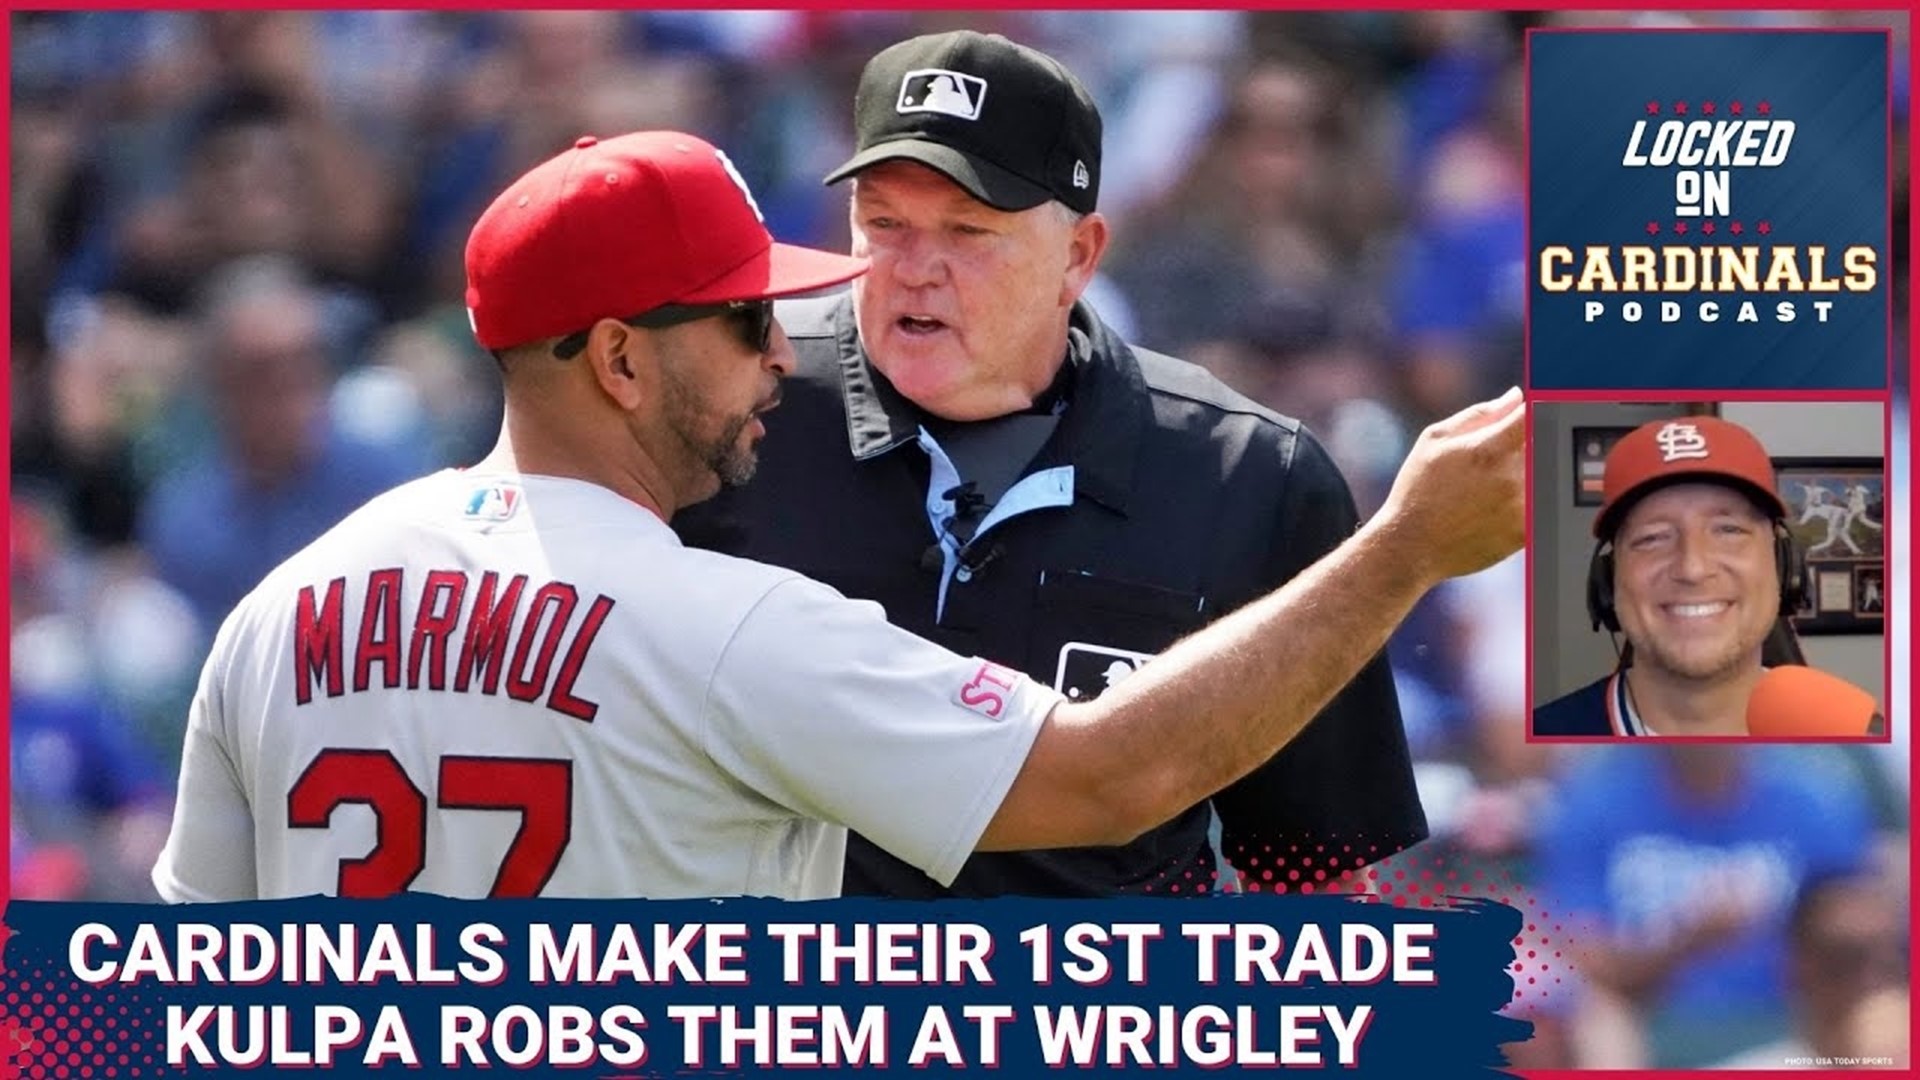 The Cardinals Make A Trade, Bad News On Donovan, Ron Kulpa And The Cubs Snap The Winning Streak